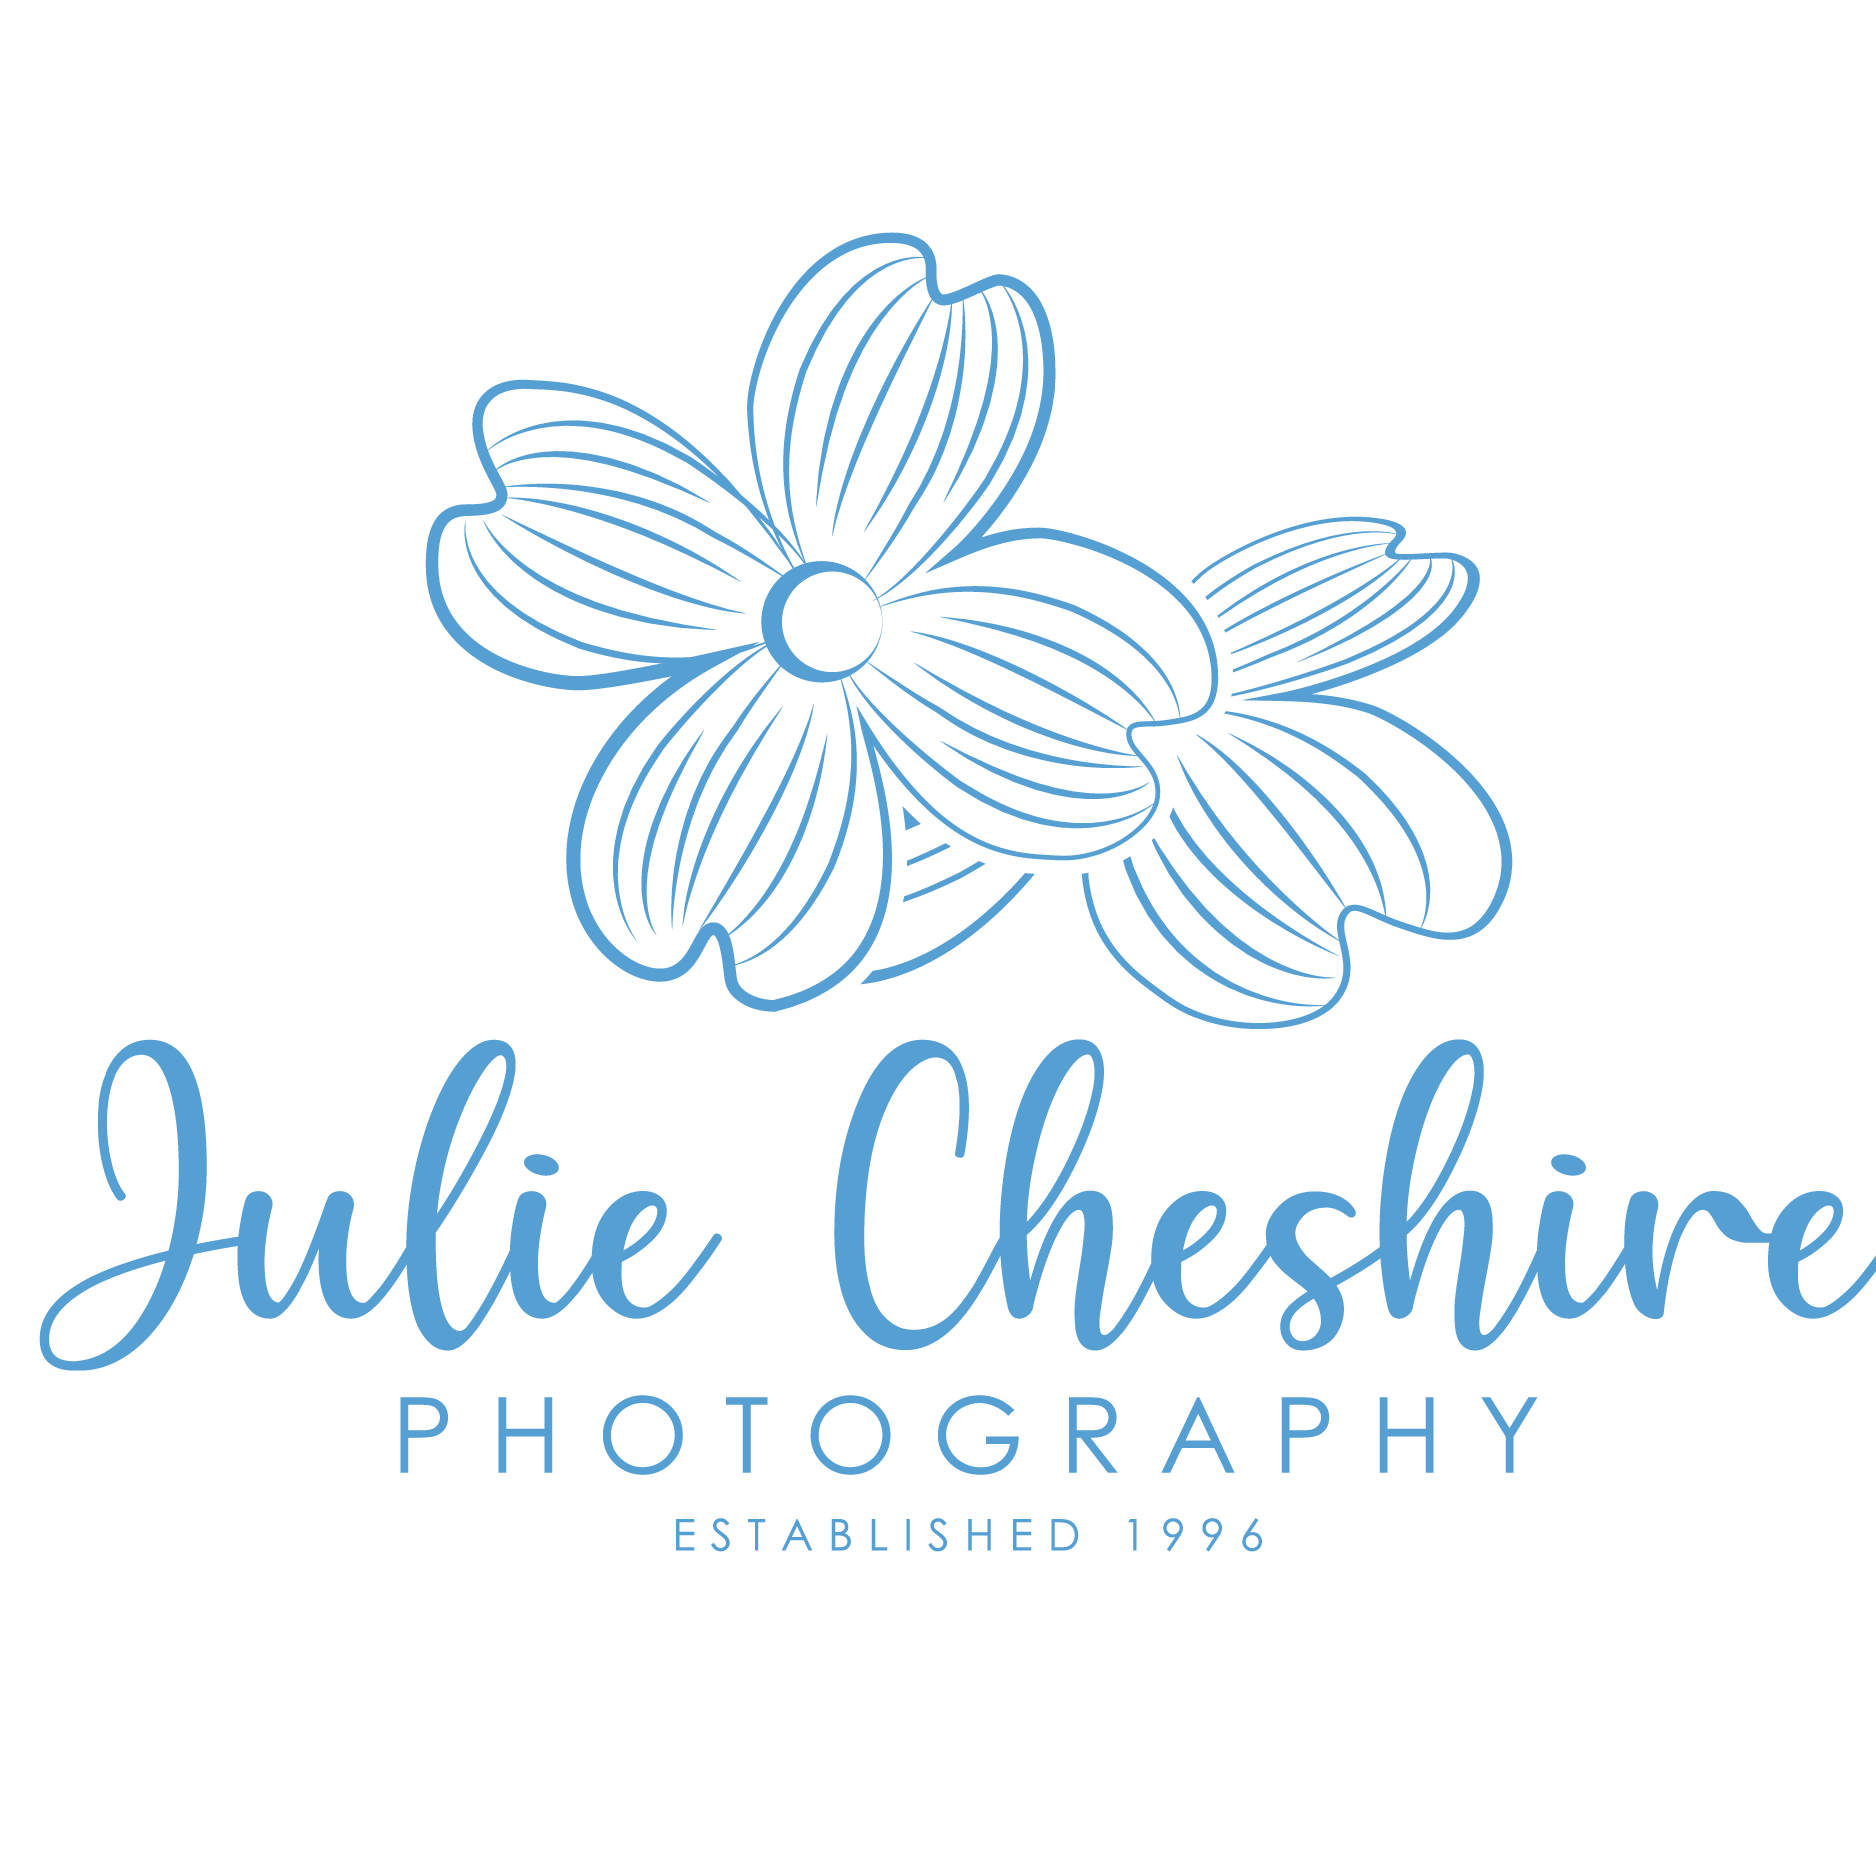 Julie Cheshire